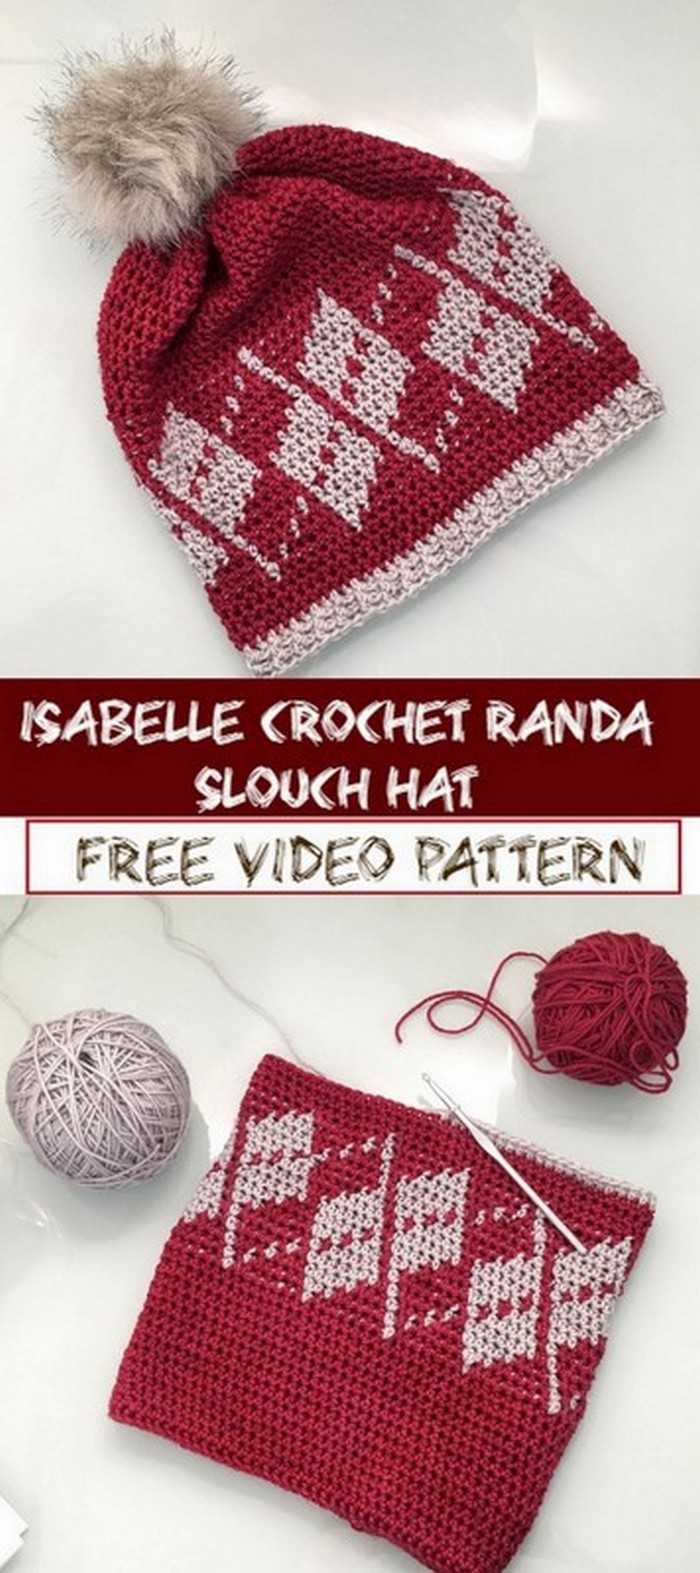 Isabelle Crochet Randa Slouch Hat